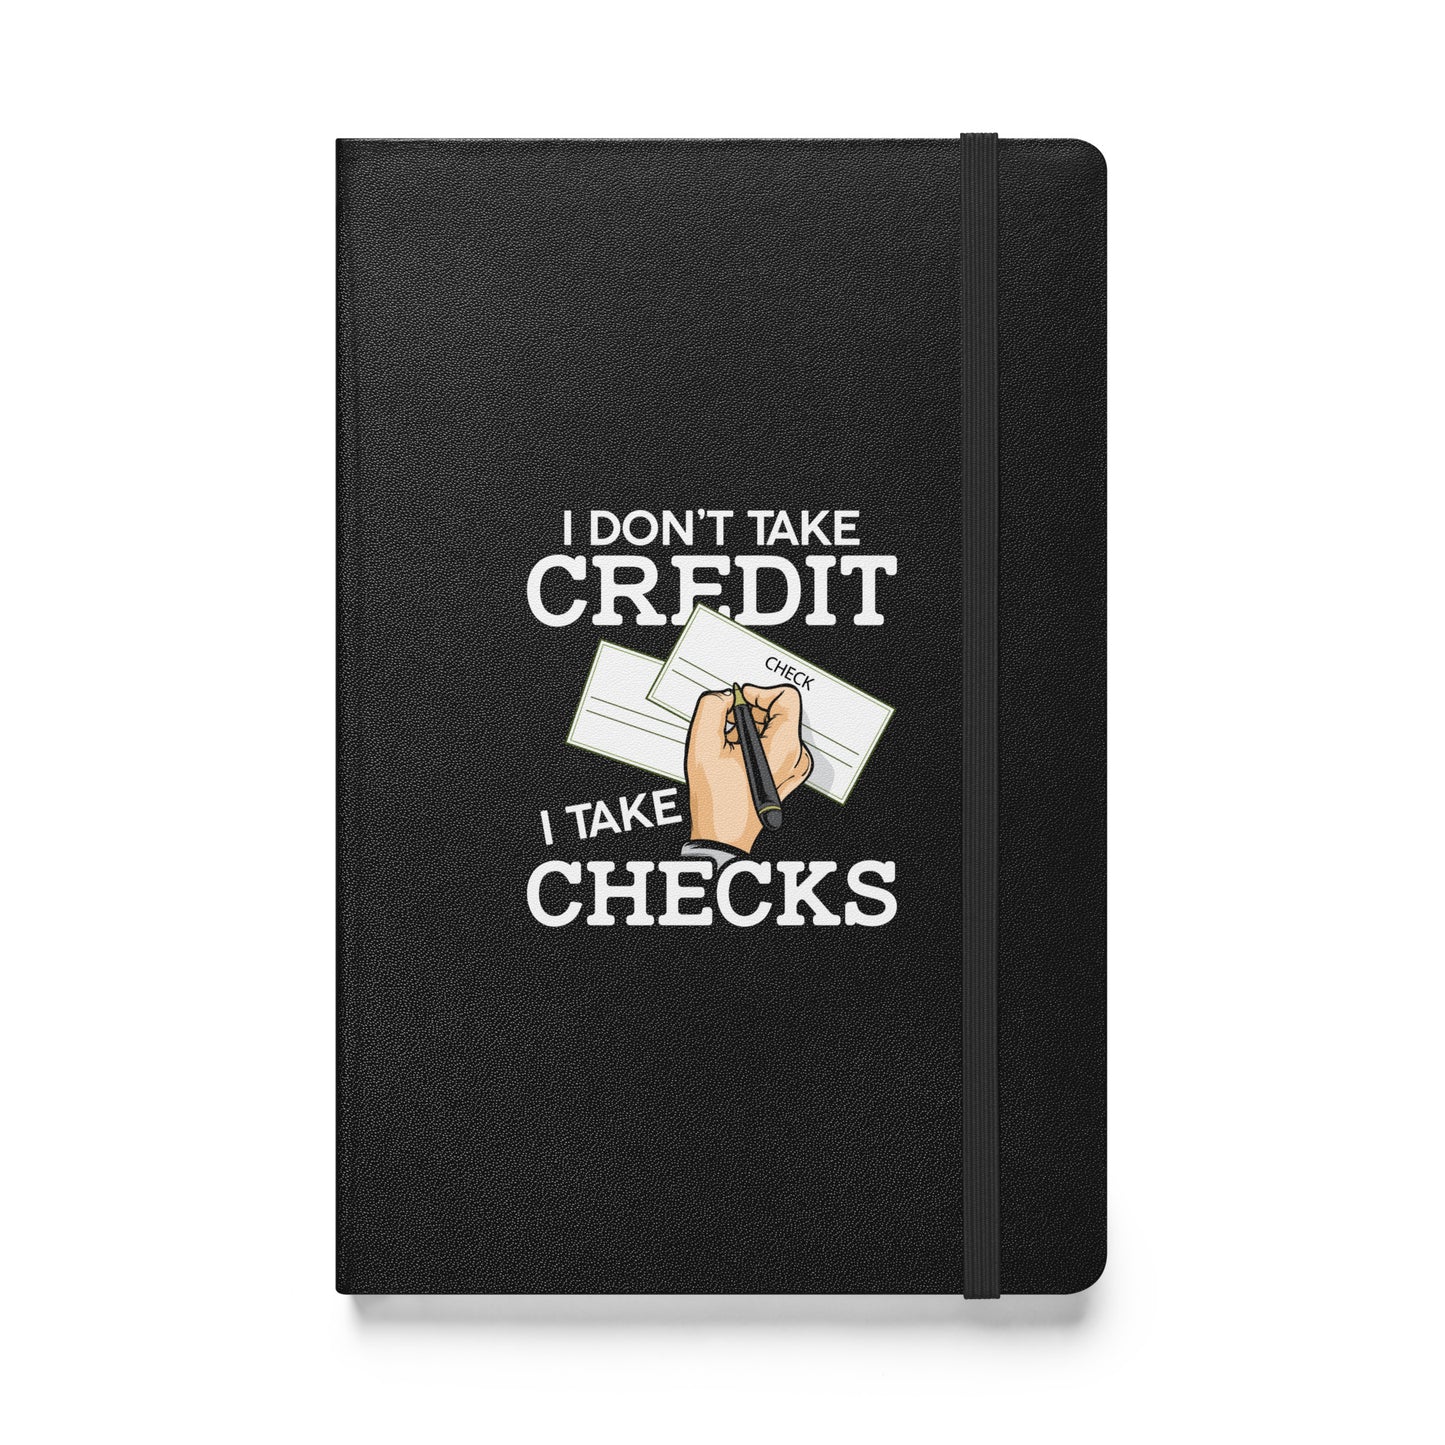 I Don't Take Credit I Take Checks Hardcover bound notebook